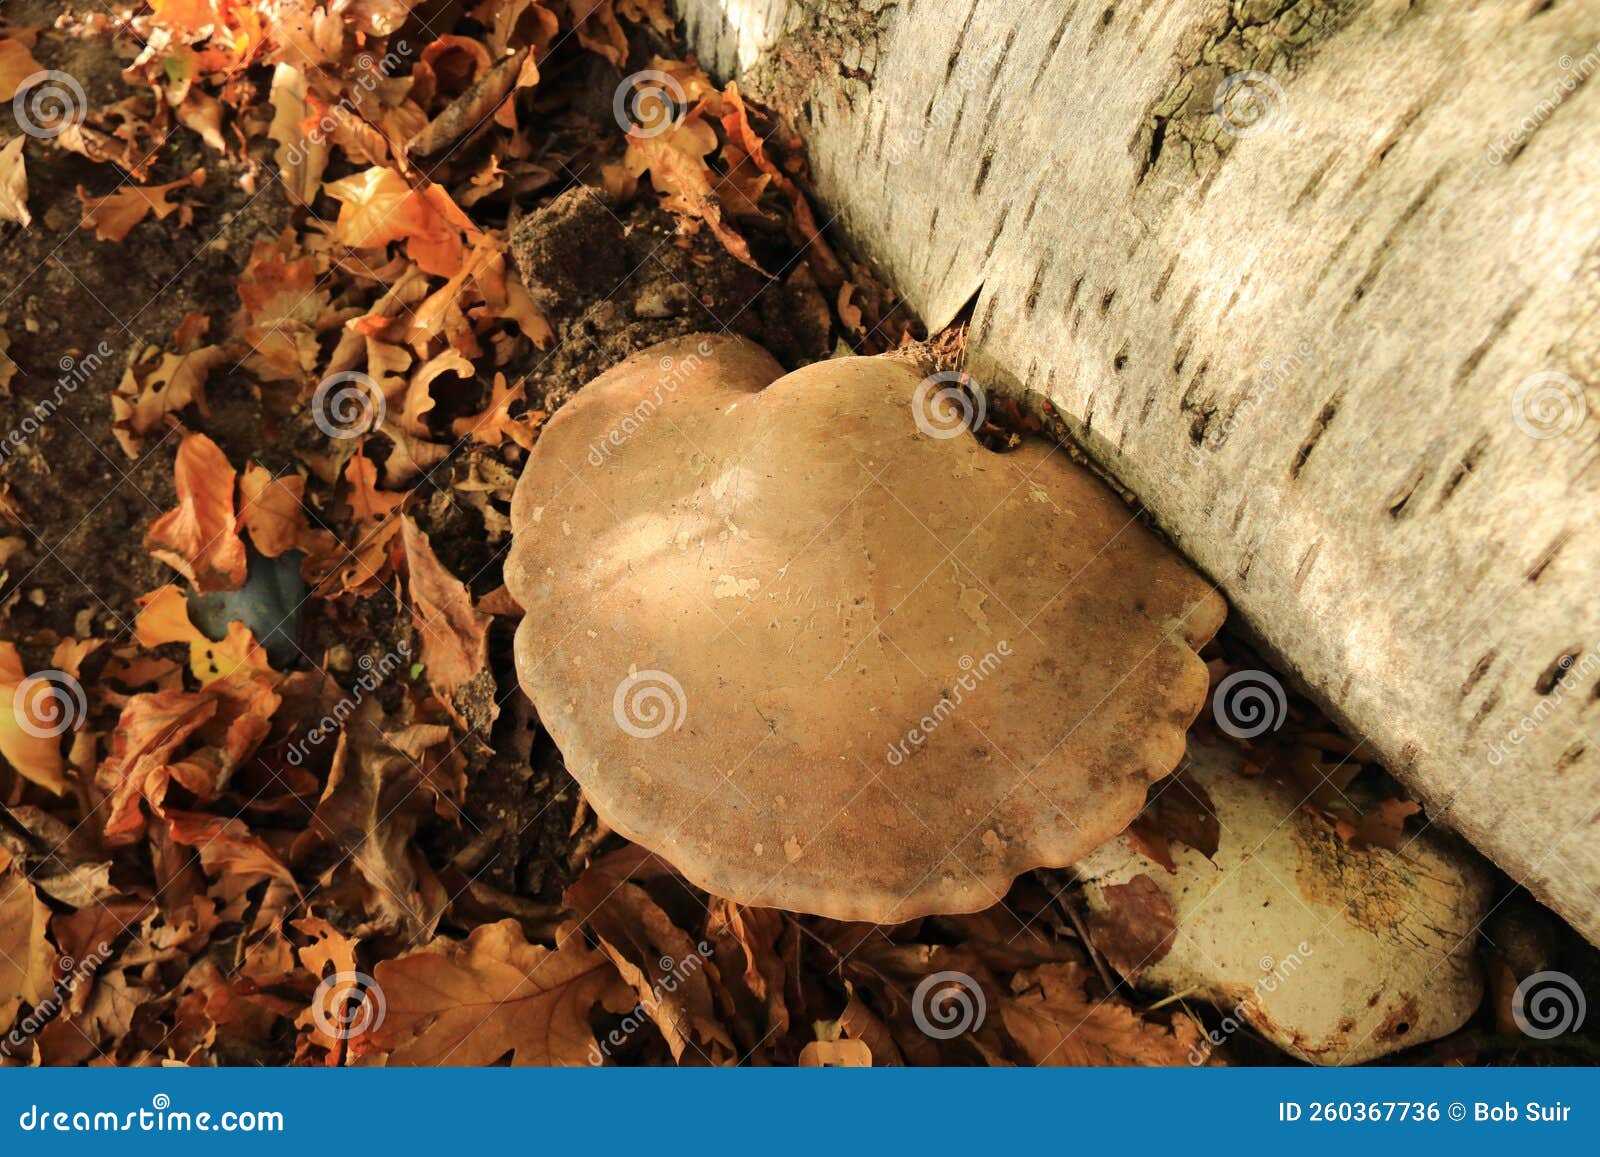 piptoporus betulinus autumn mushroom growing on tree